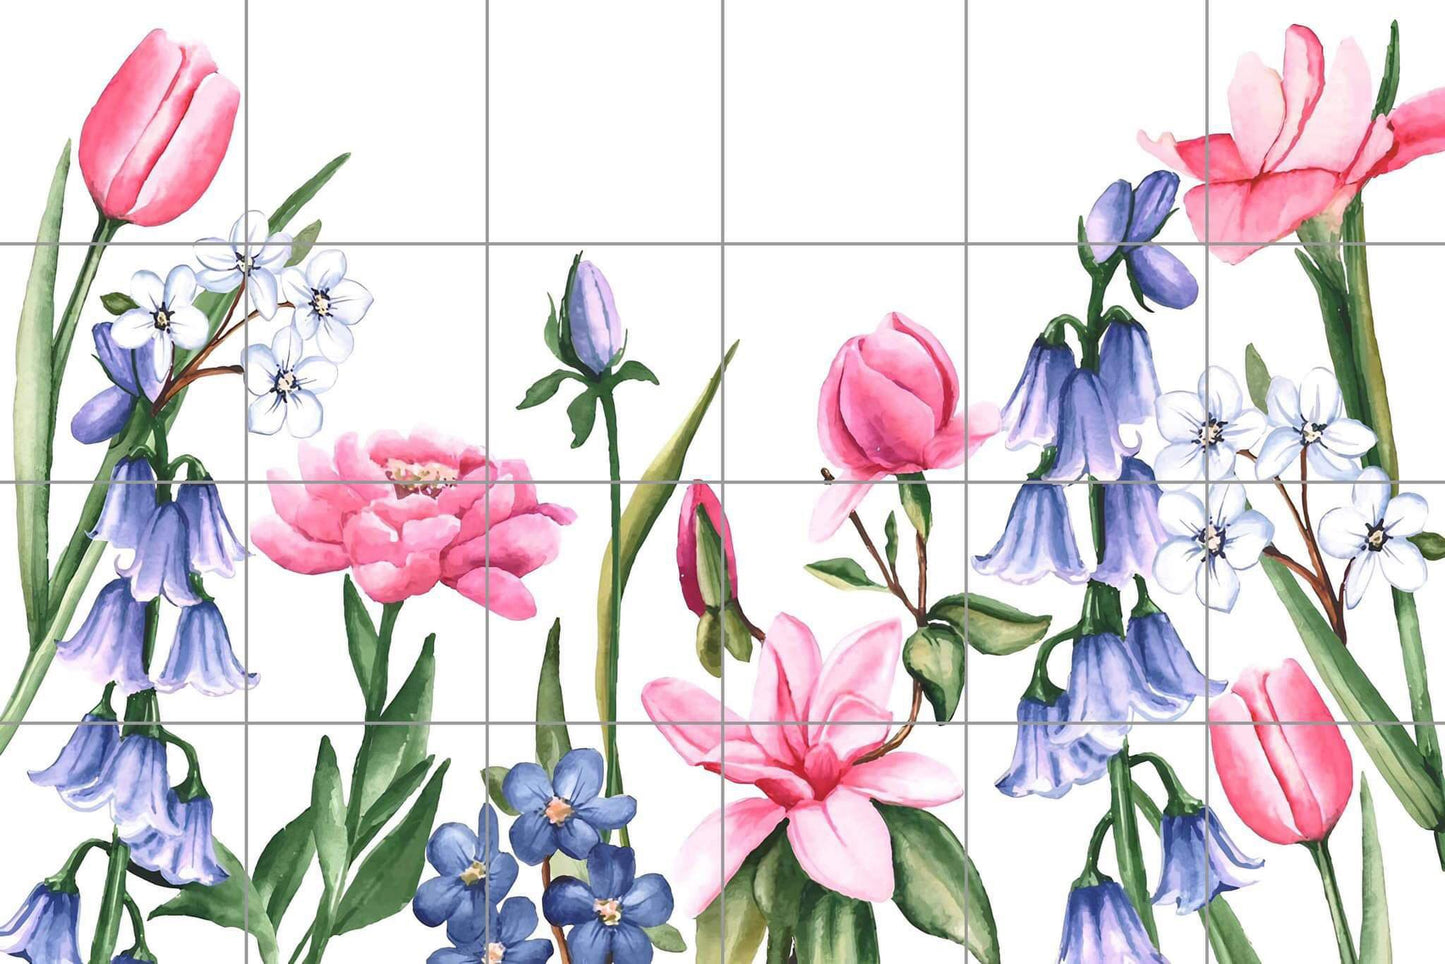 Tile Mural/Mosaic Ceramic of Flowers watercolour painting - 3 Mosaics of Watercolor Flowers print - Tile Mural -Gloss Tiles -Tile Mosaic -Vintage Botanica